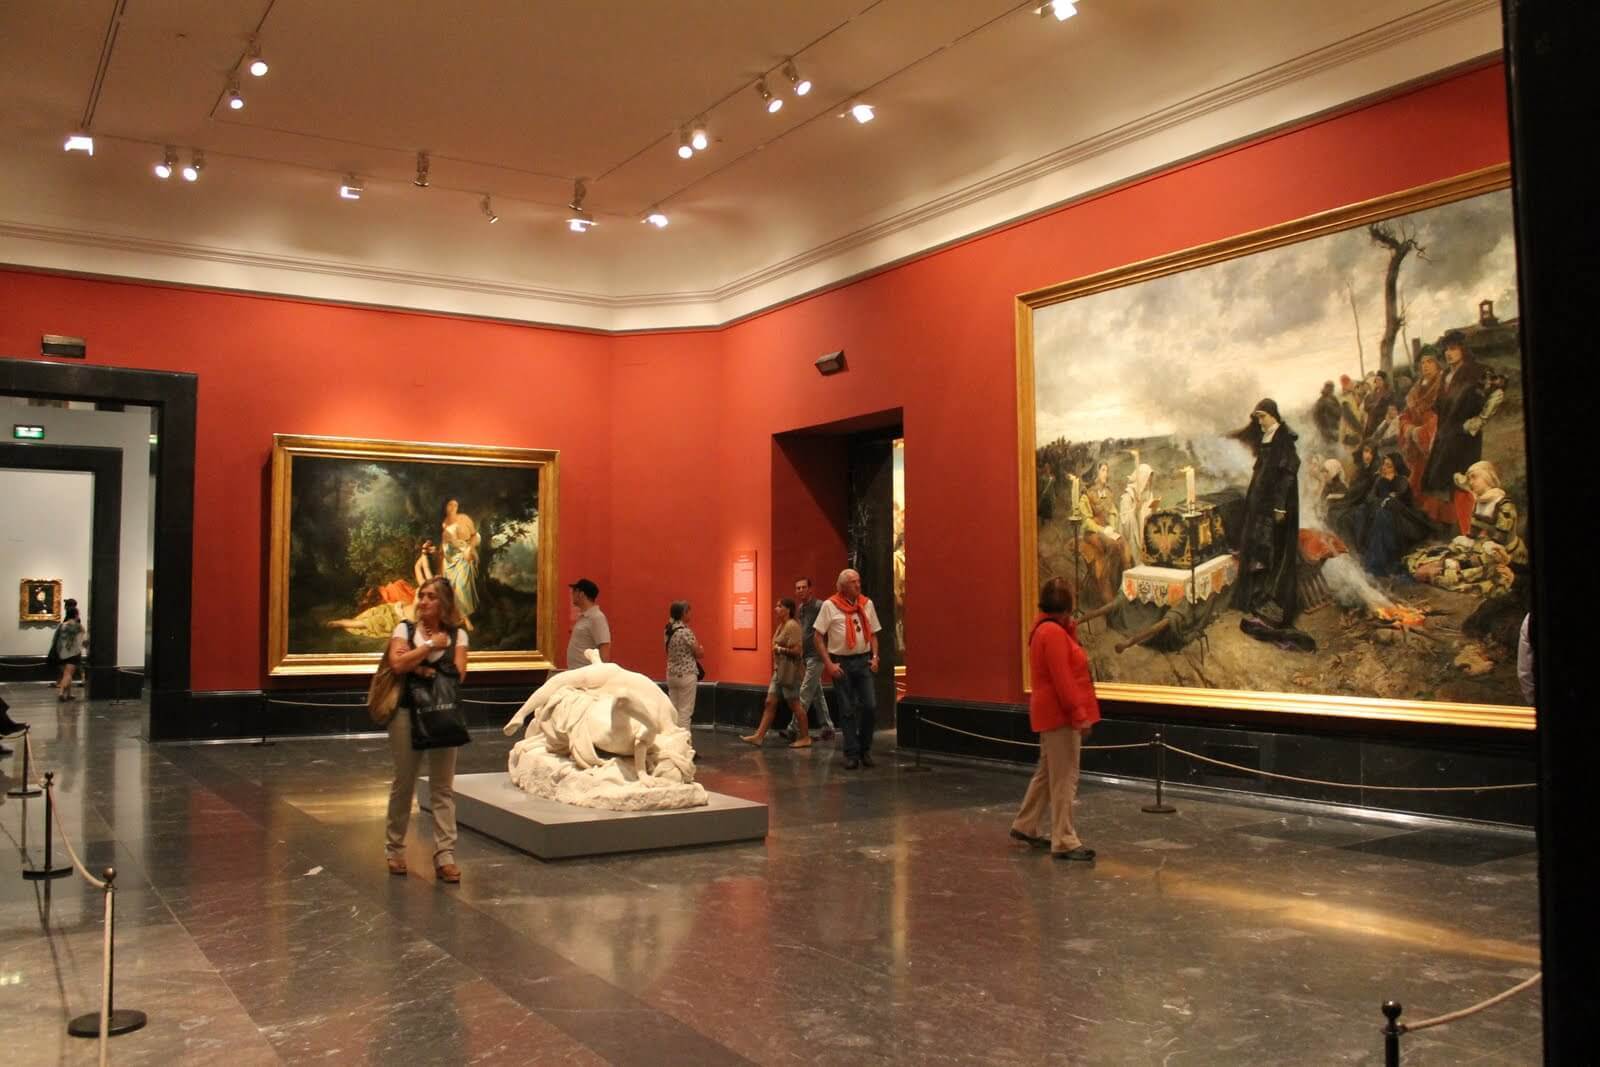 Национальный музей прадо мадрид